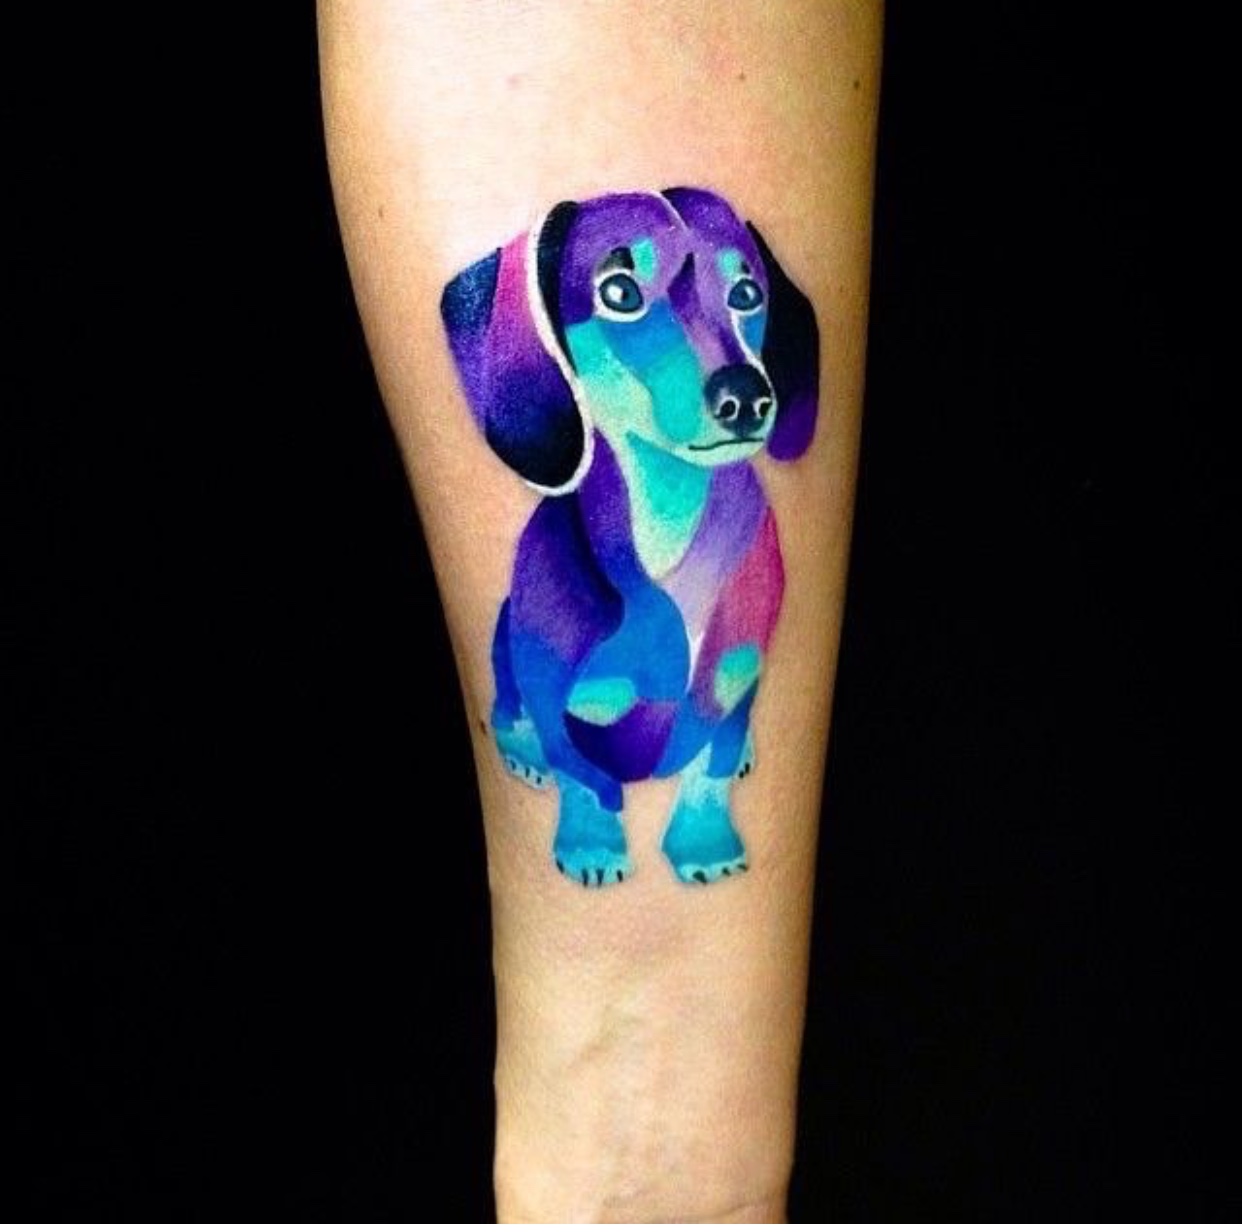  iridescent colored Dachshund tattoo on arm